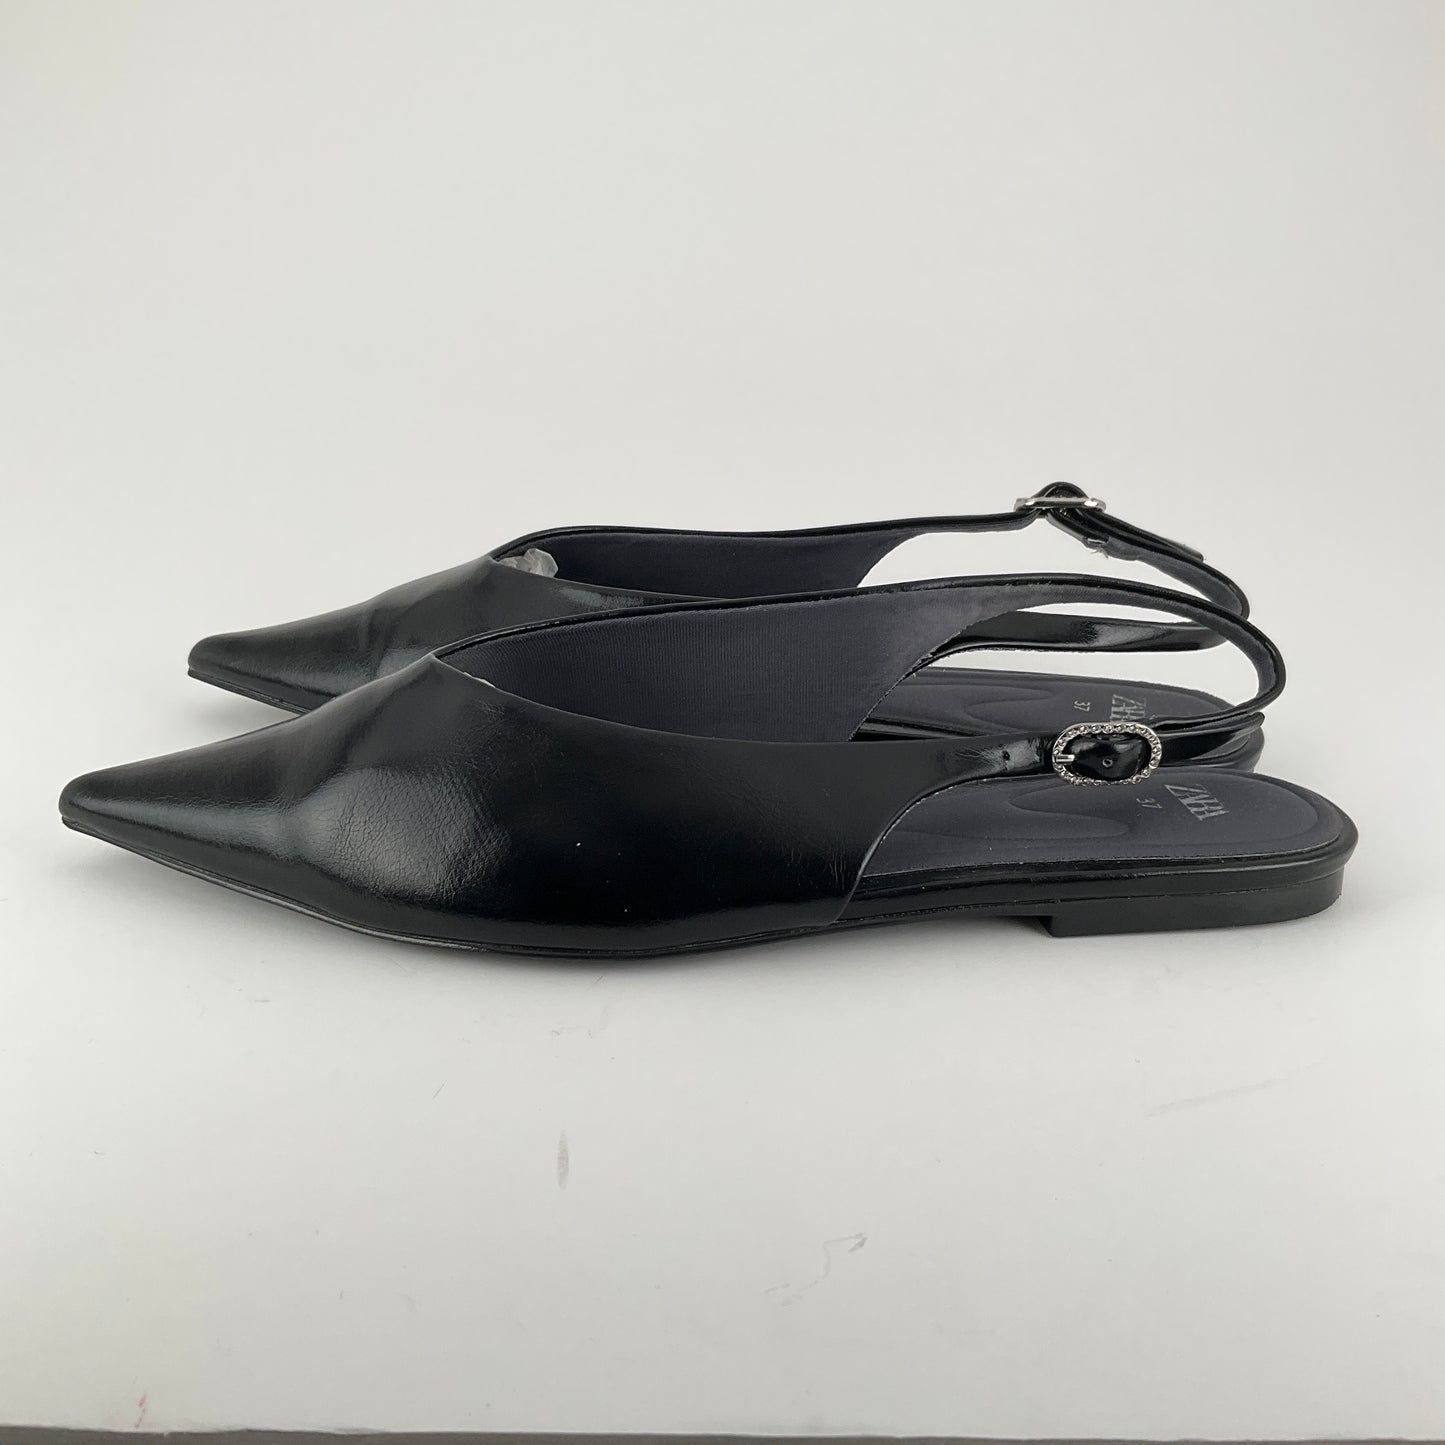 Zara - Closed Toe Sandals - Size 37